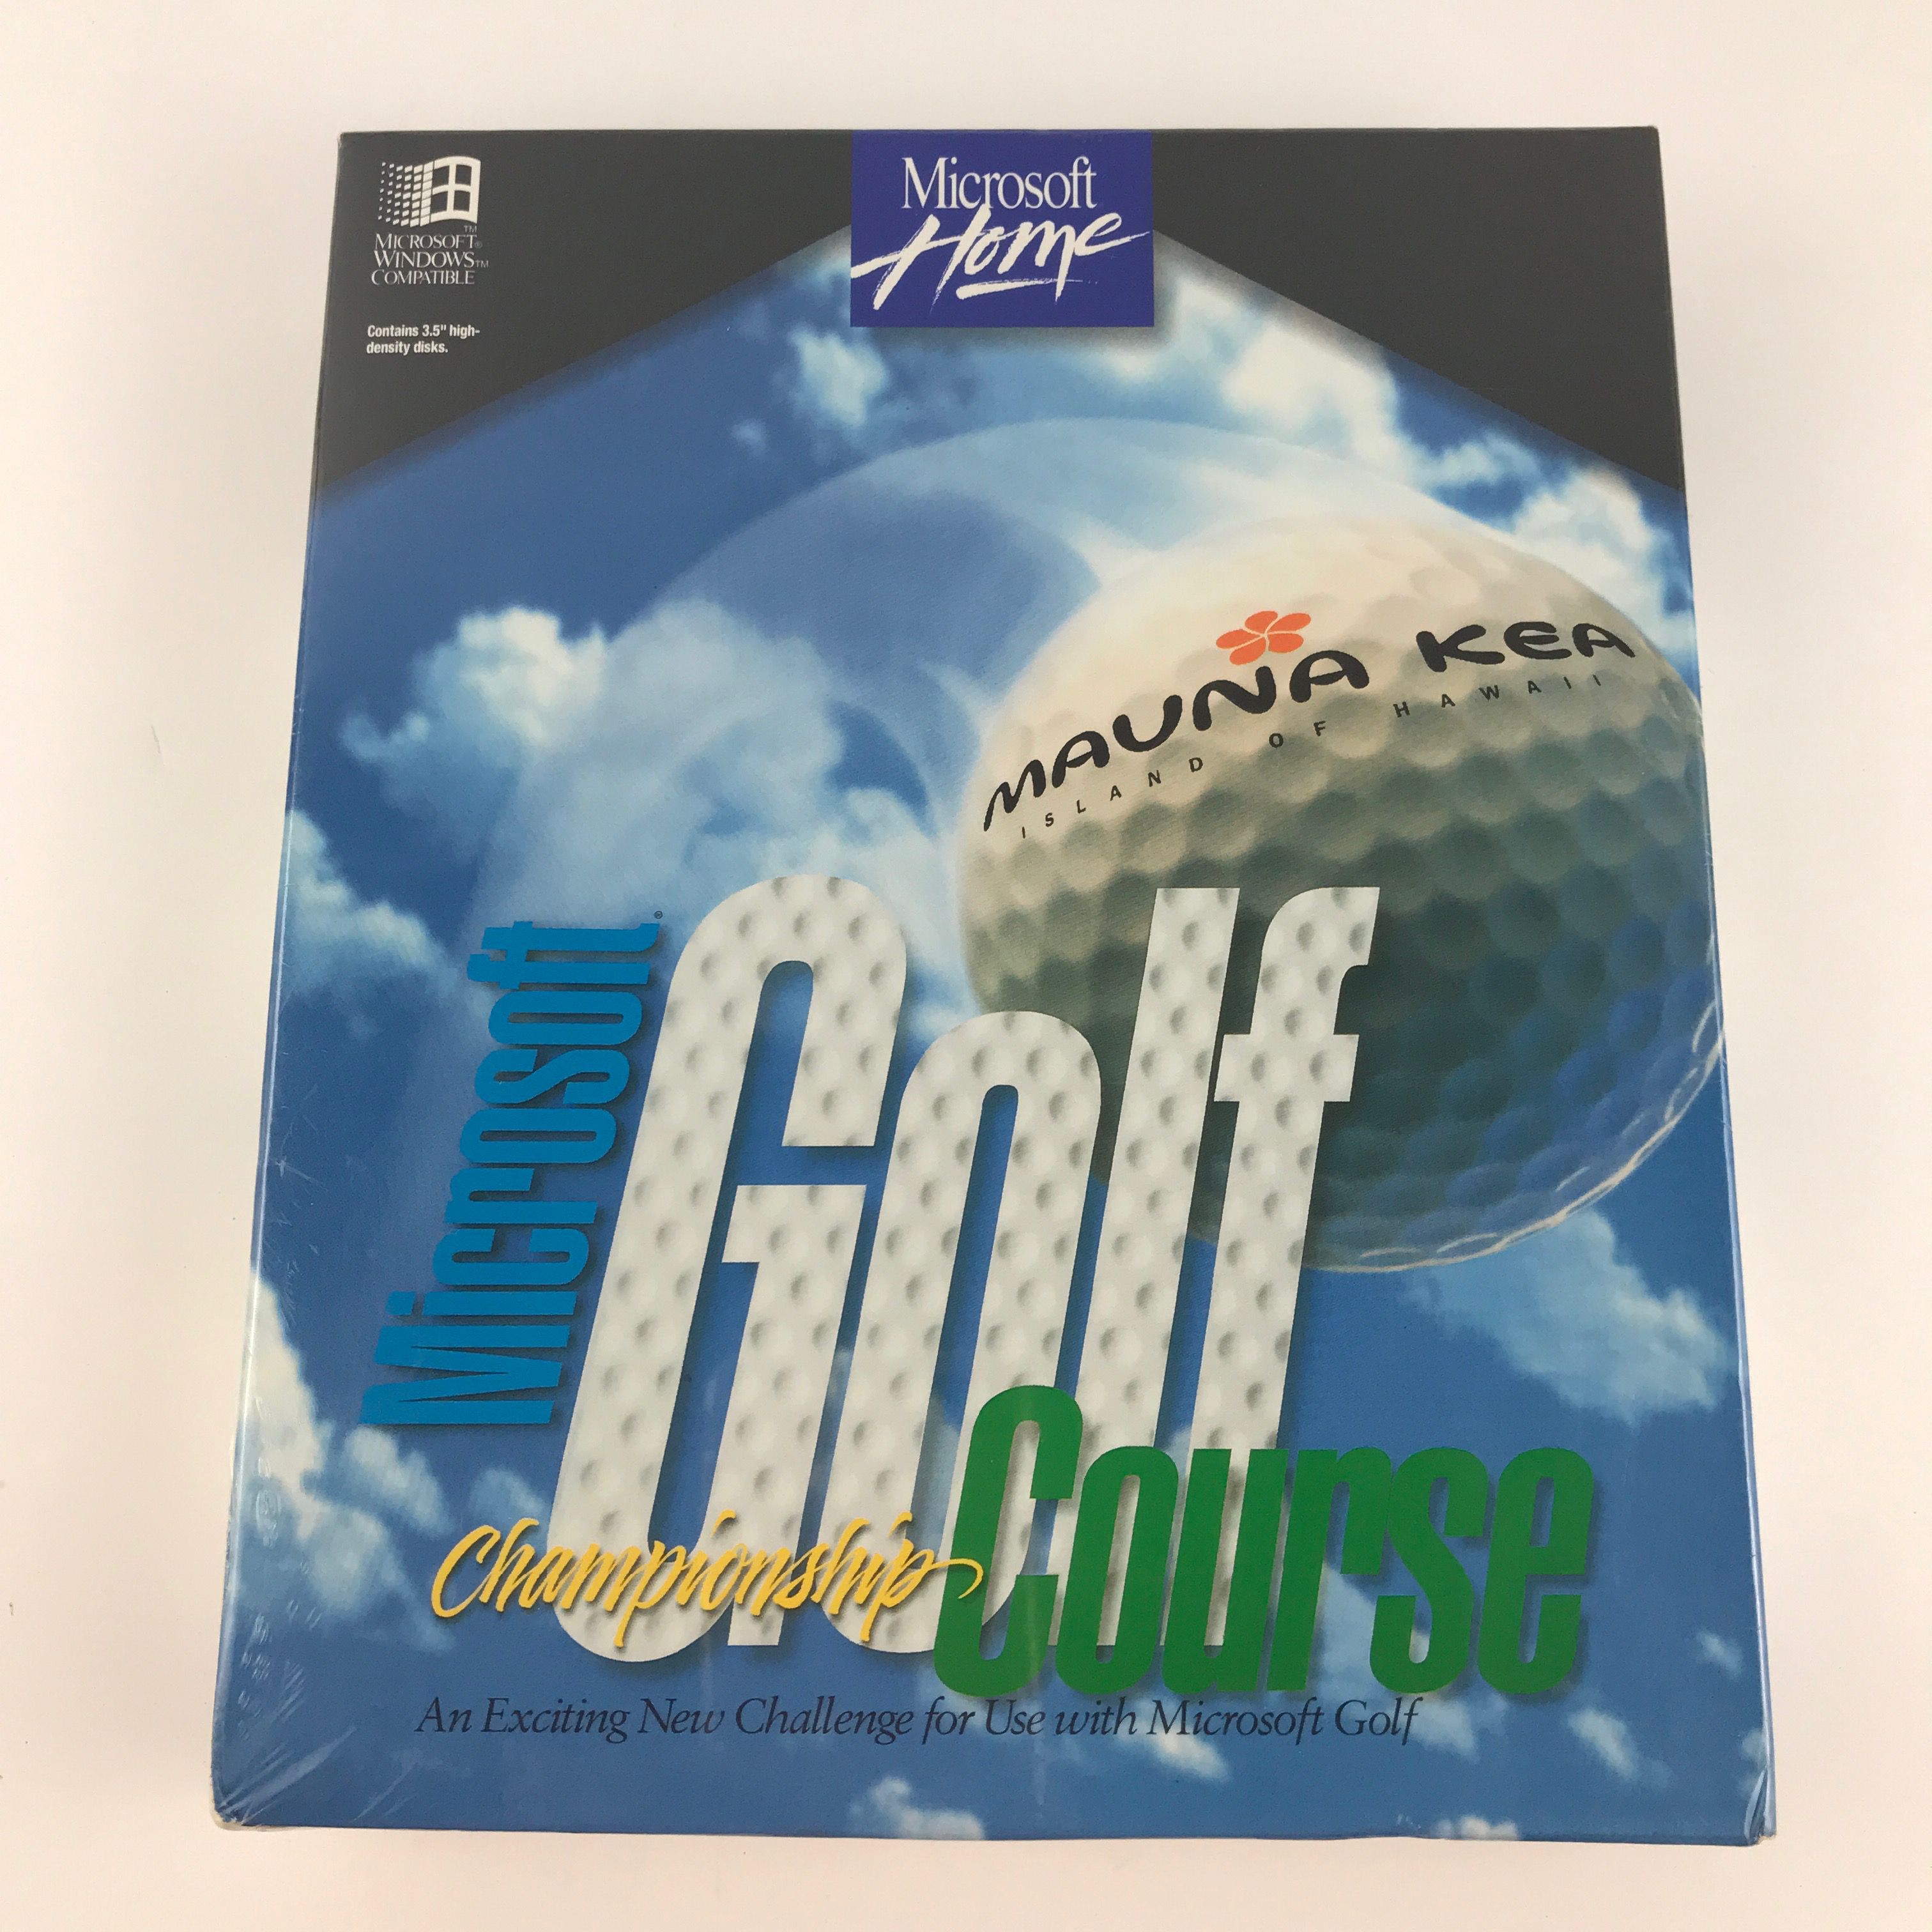 Microsoft Home Mauna Kea Microsoft Golf Championship Course Windows Compatible